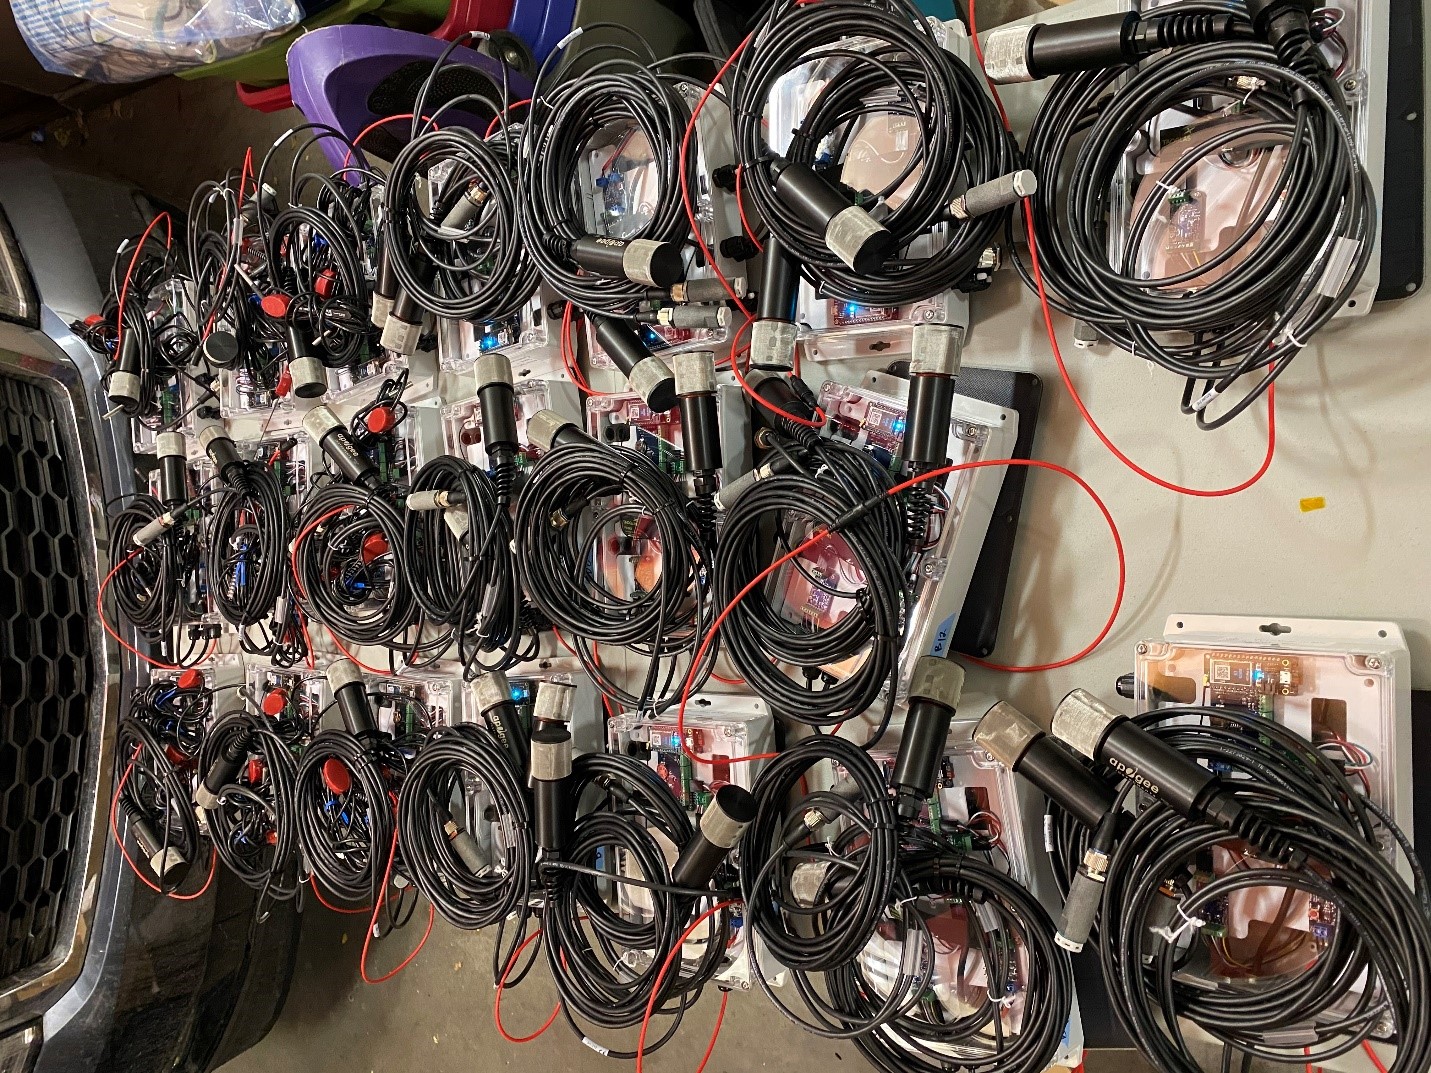 over 20 sensor equipment setups lined up on a cement floor